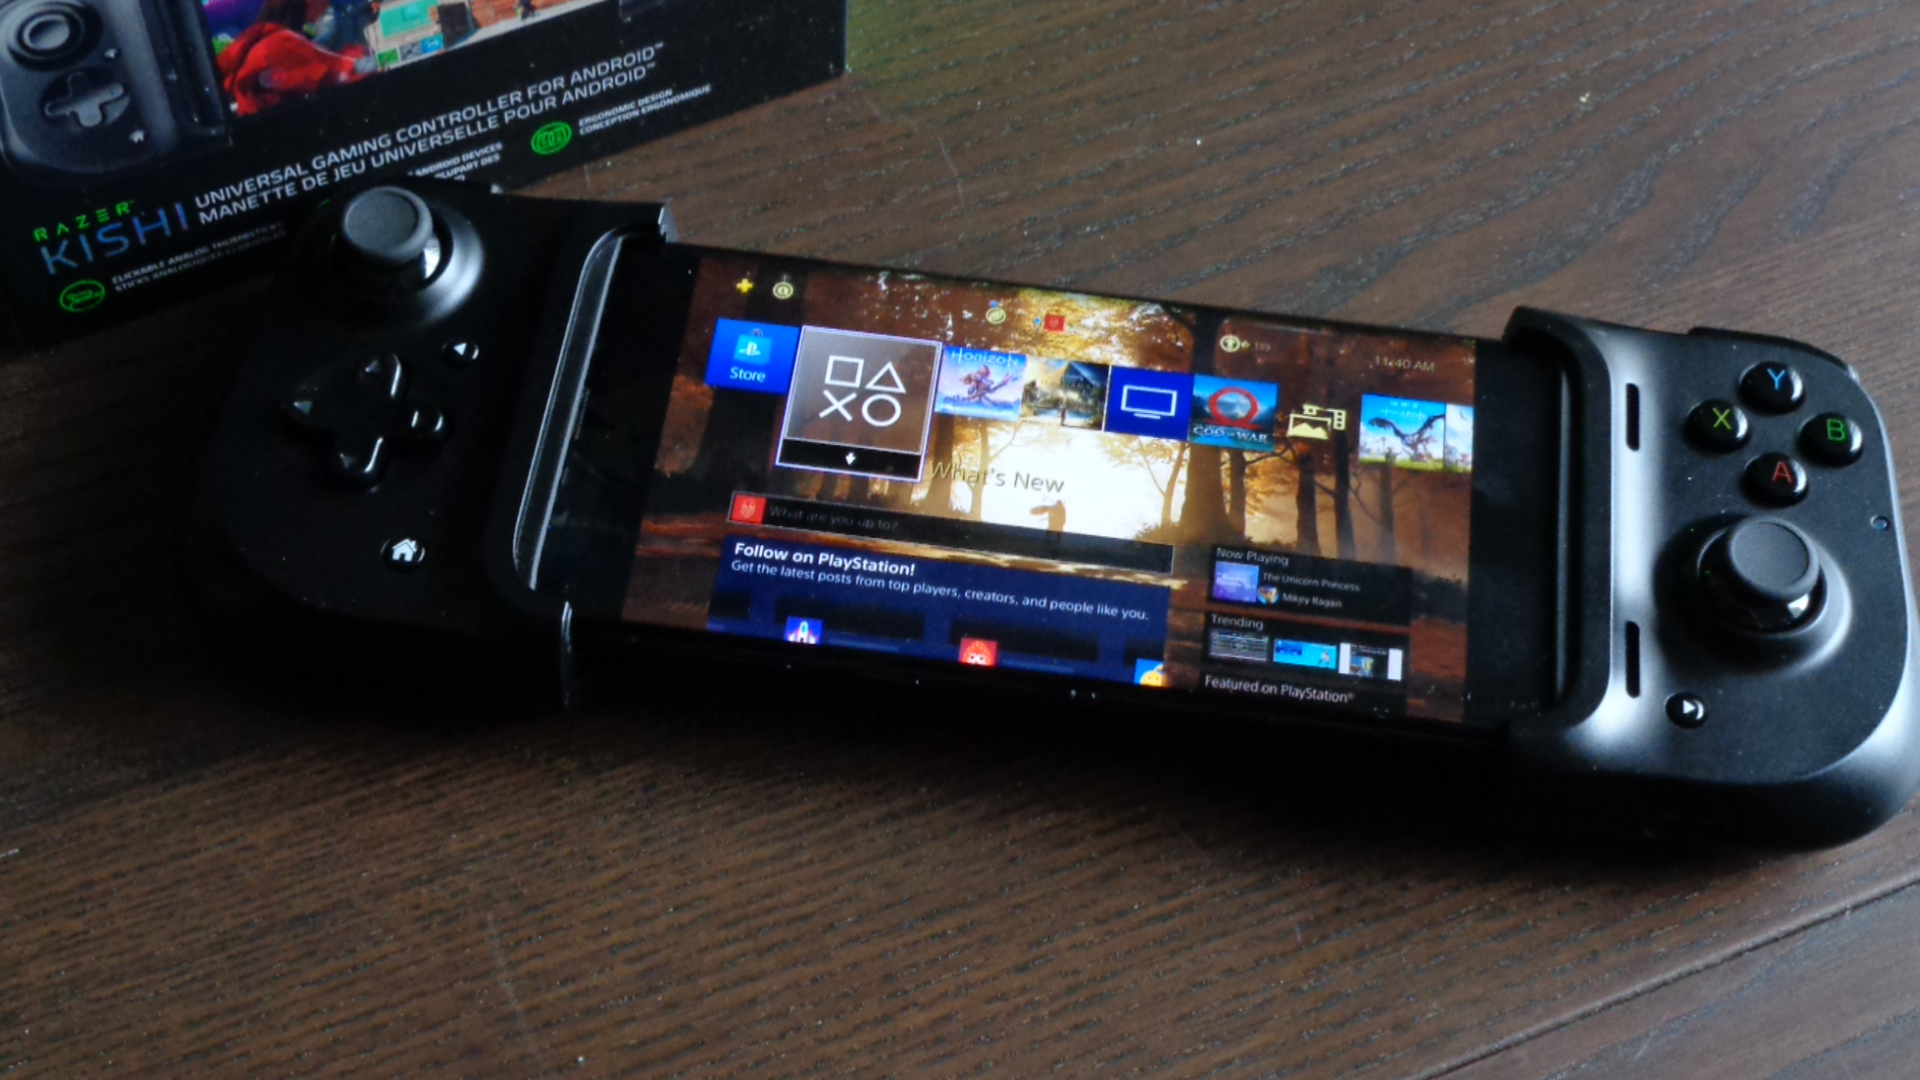 Razer Kishi V2 Xbox Editions - Phone Controller for Xbox Remote Play